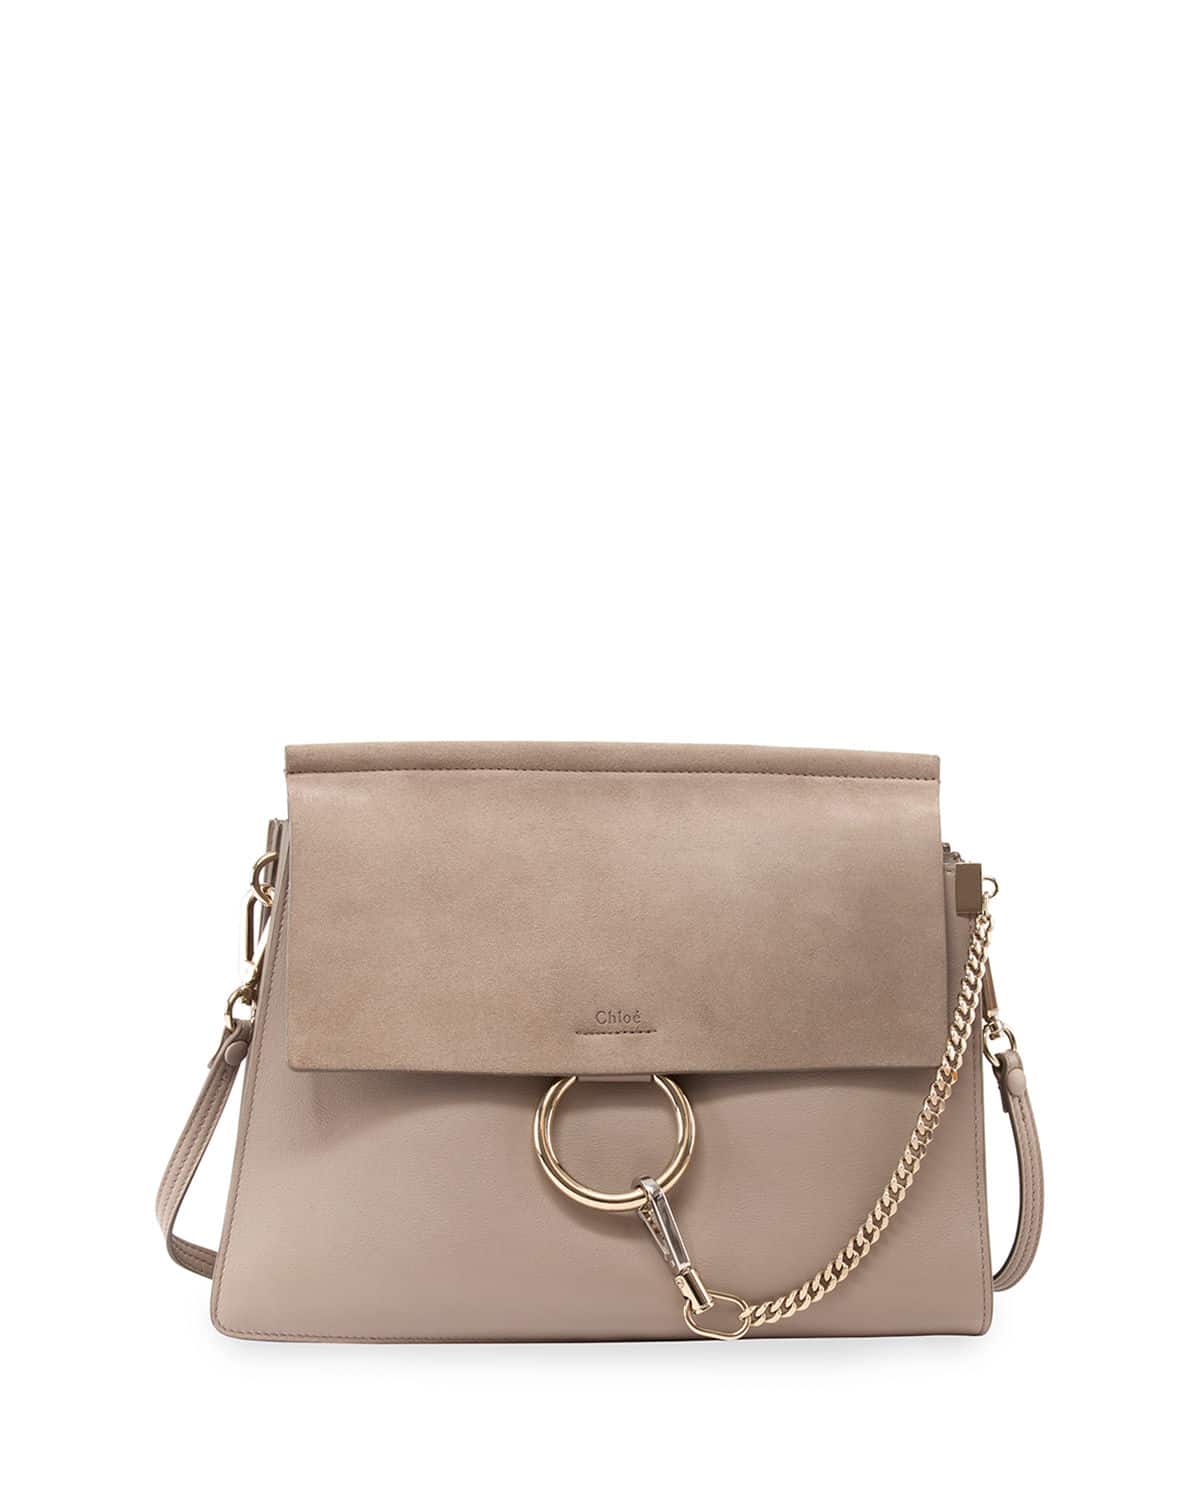 chloe small kurtis suede leather shoulder bag, chloe handbags online